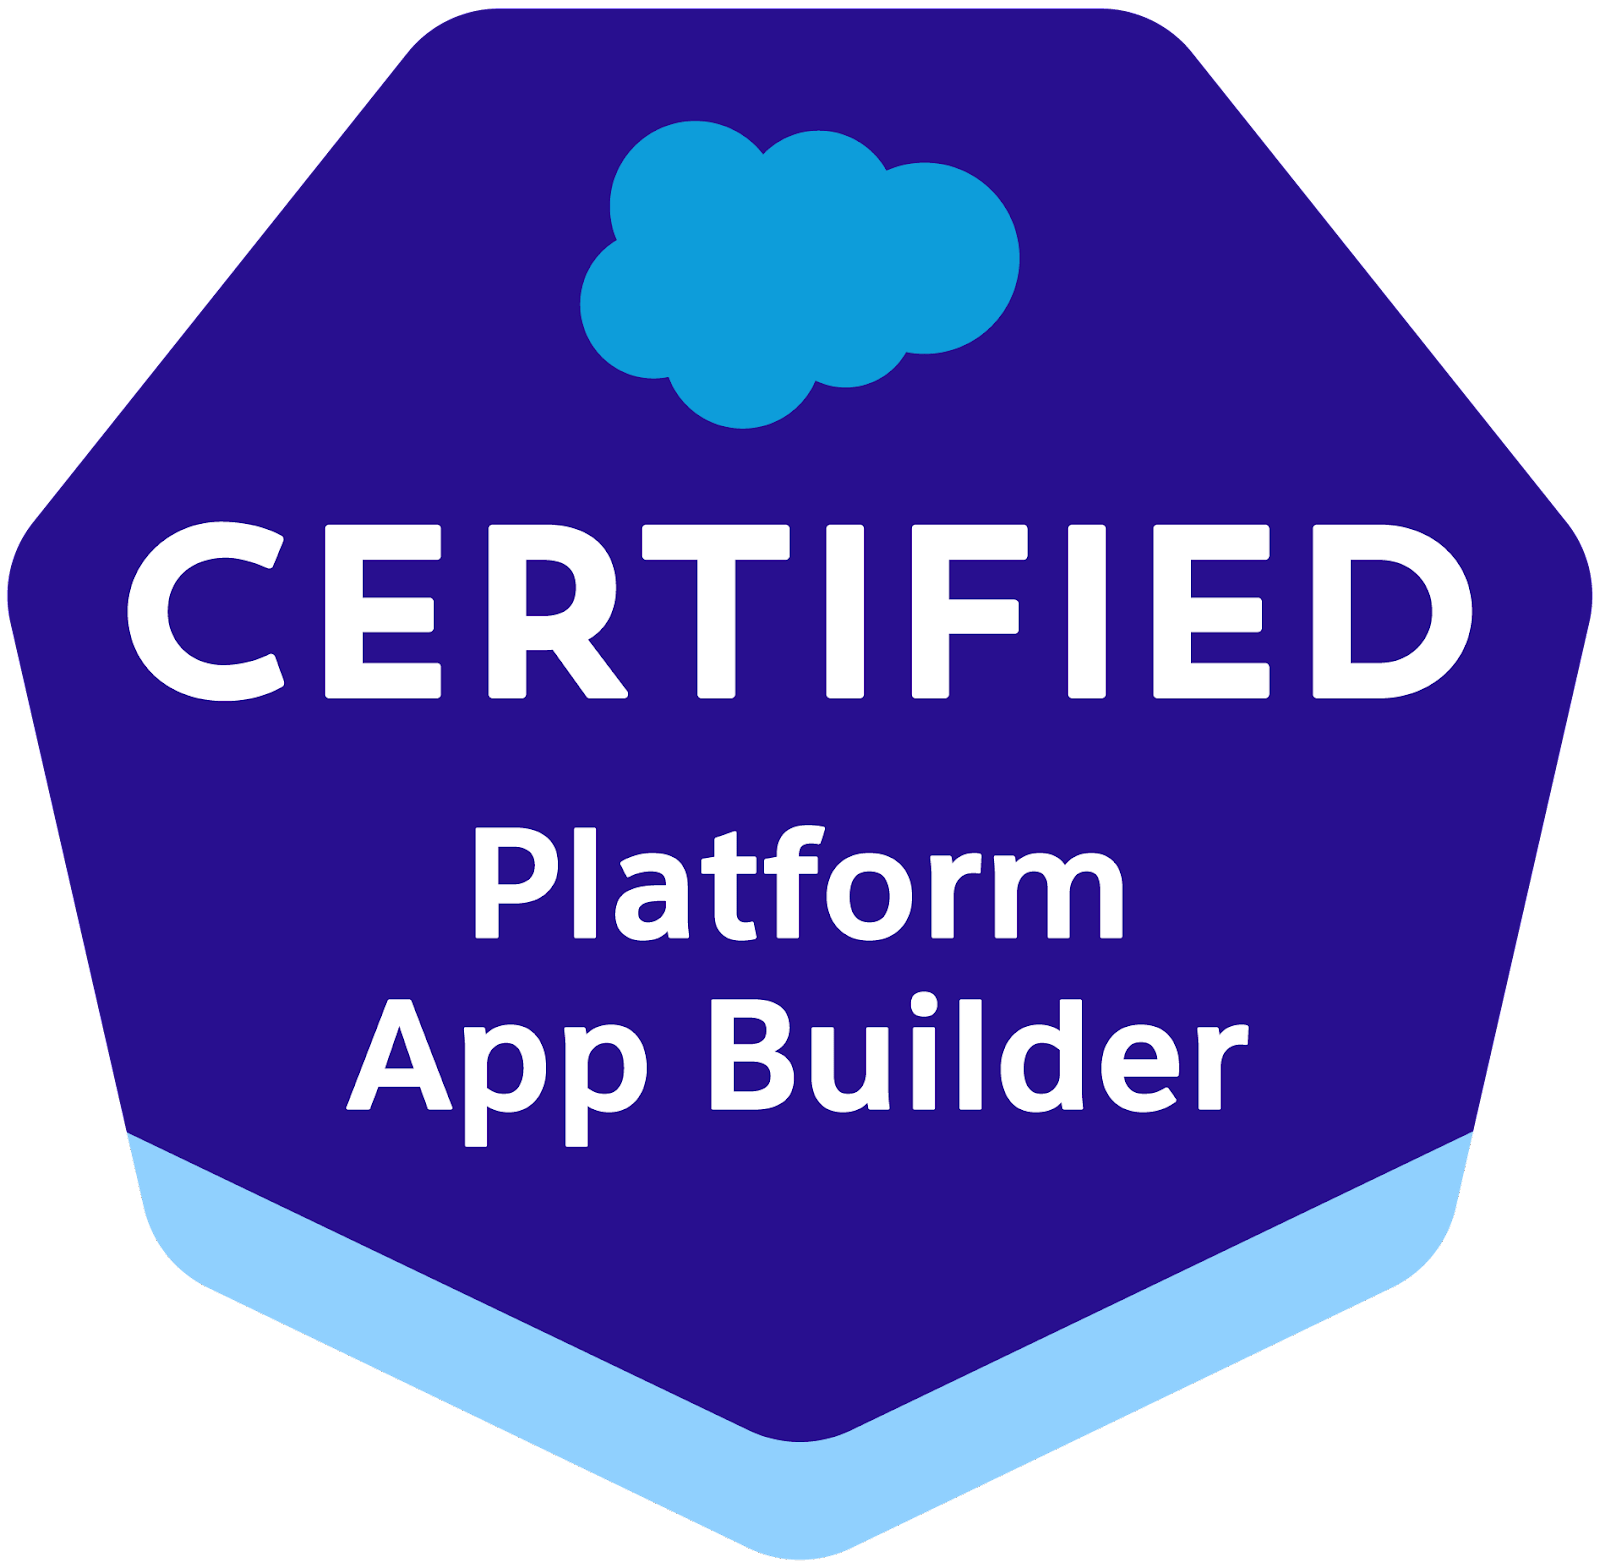 Salesforce certified Platform App Builder badge